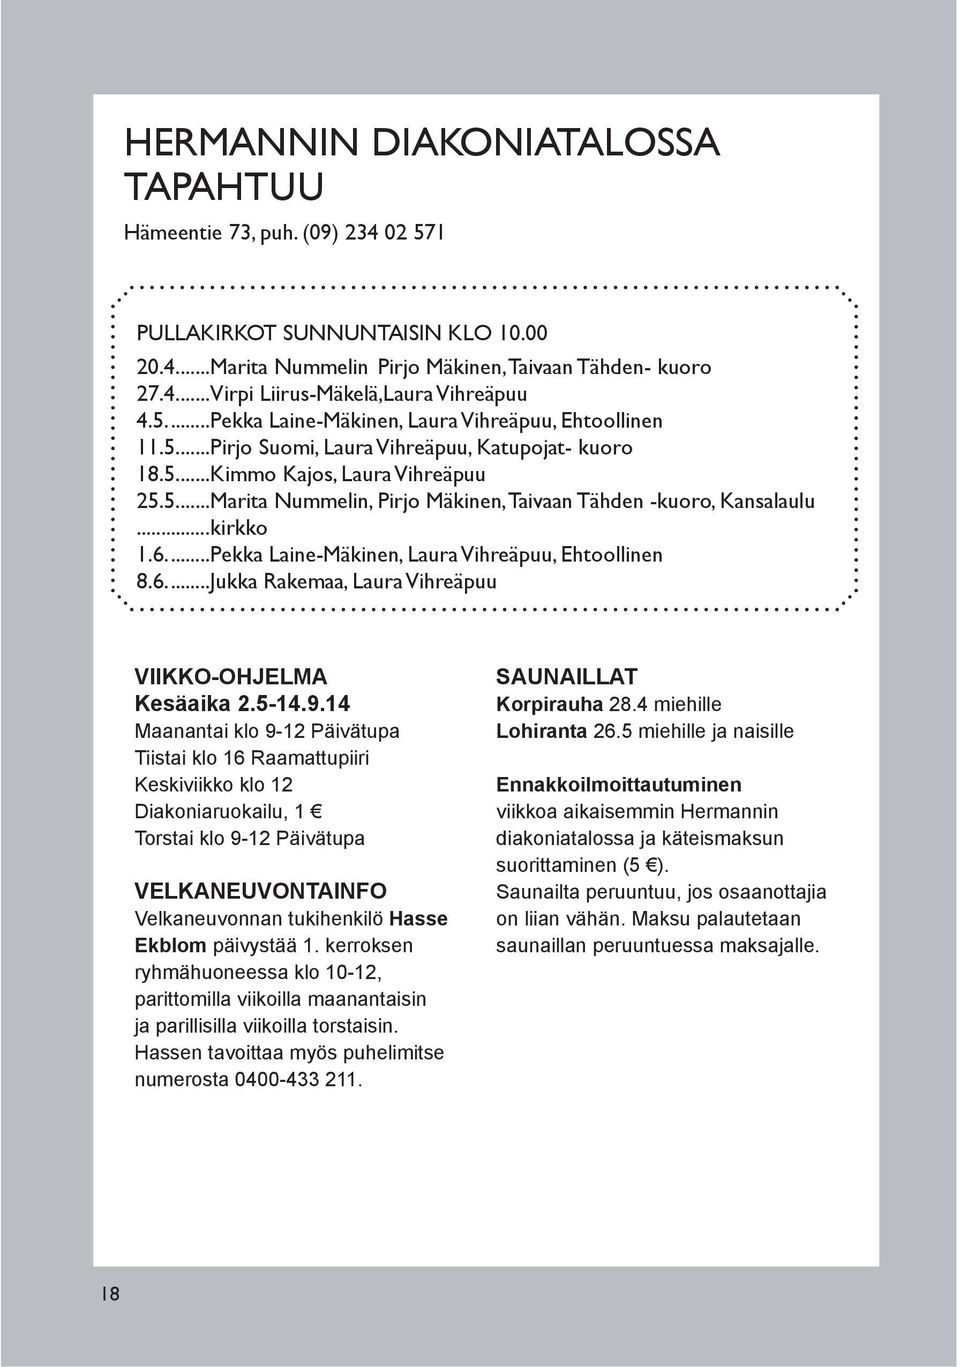 ..kirkko 1.6...Pekka Laine-Mäkinen, Laura Vihreäpuu, Ehtoollinen 8.6...Jukka Rakemaa, Laura Vihreäpuu VIIKKO-OHJELMA Kesäaika 2.5-14.9.